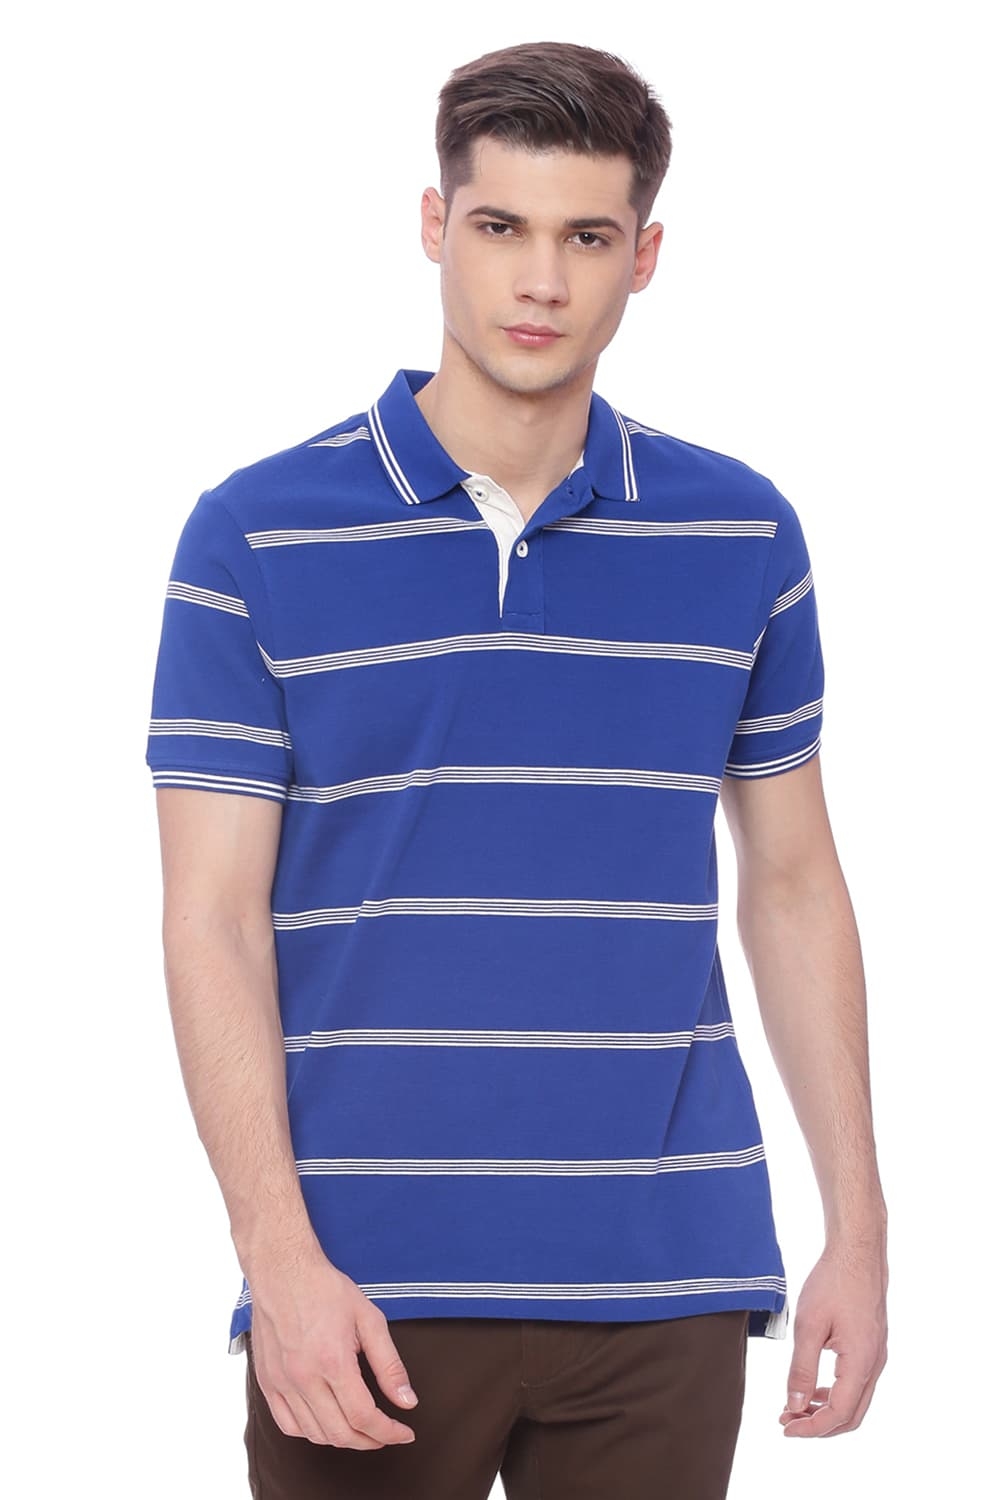 BASICS | Basics Muscle Fit Limoges Blue Striped Polo T Shirt